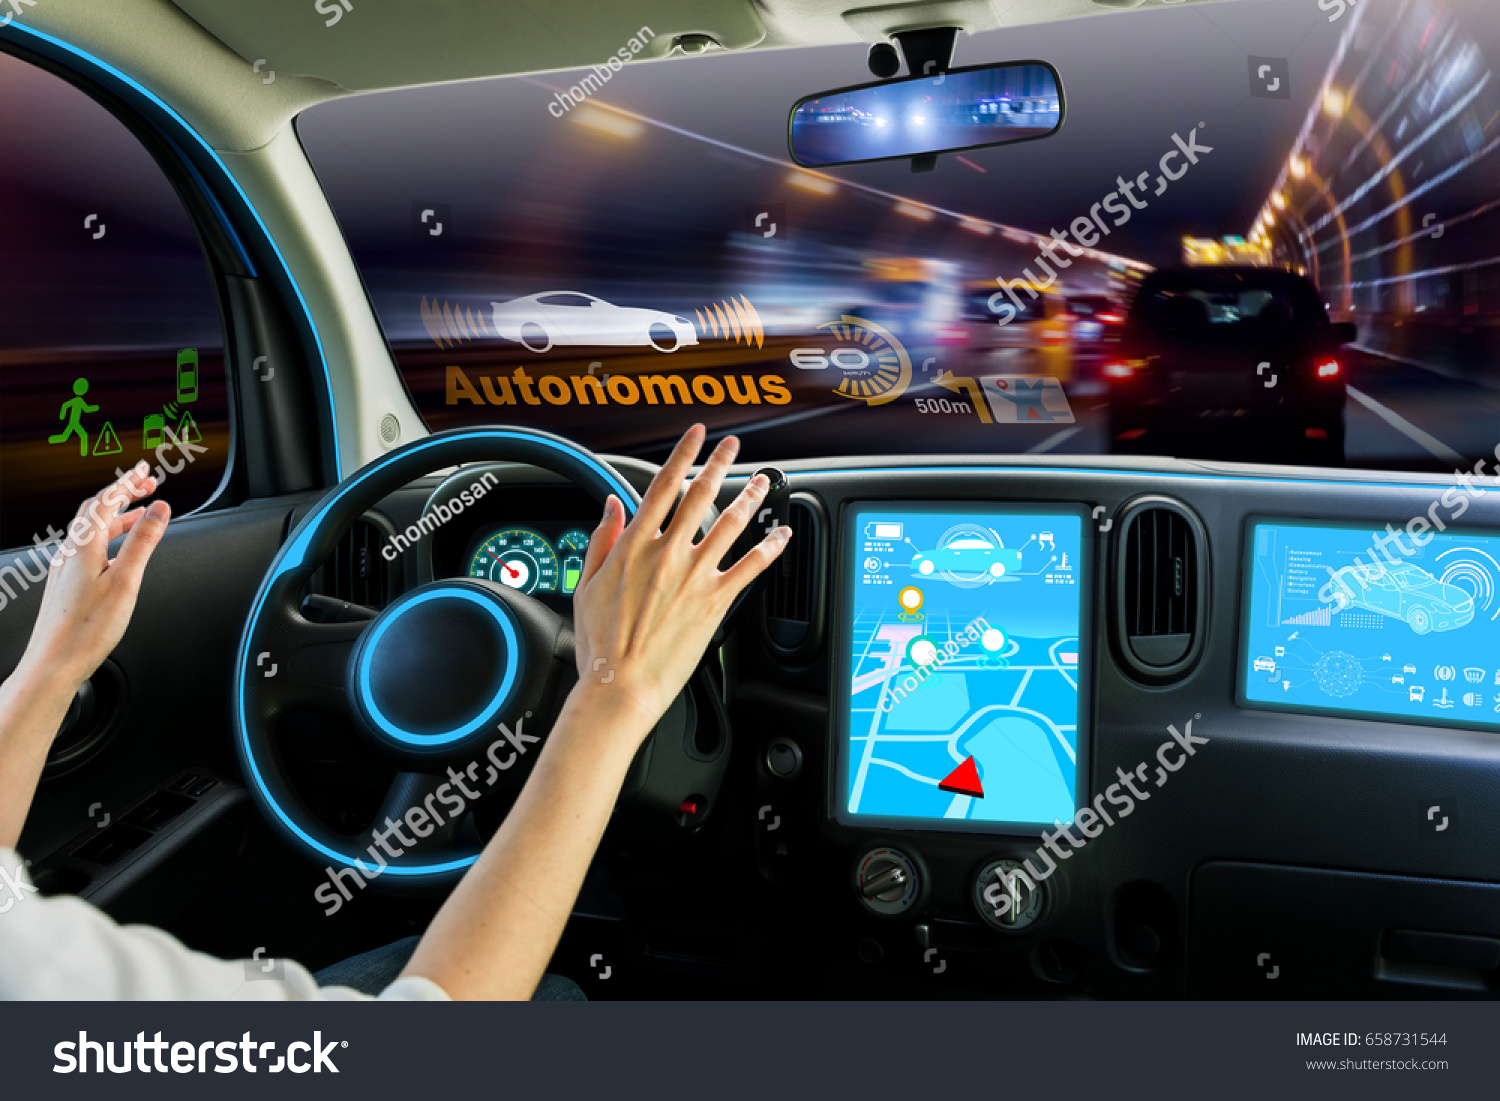 cockpit of autonomous car. self driving vehicle hands free driving. #658731544